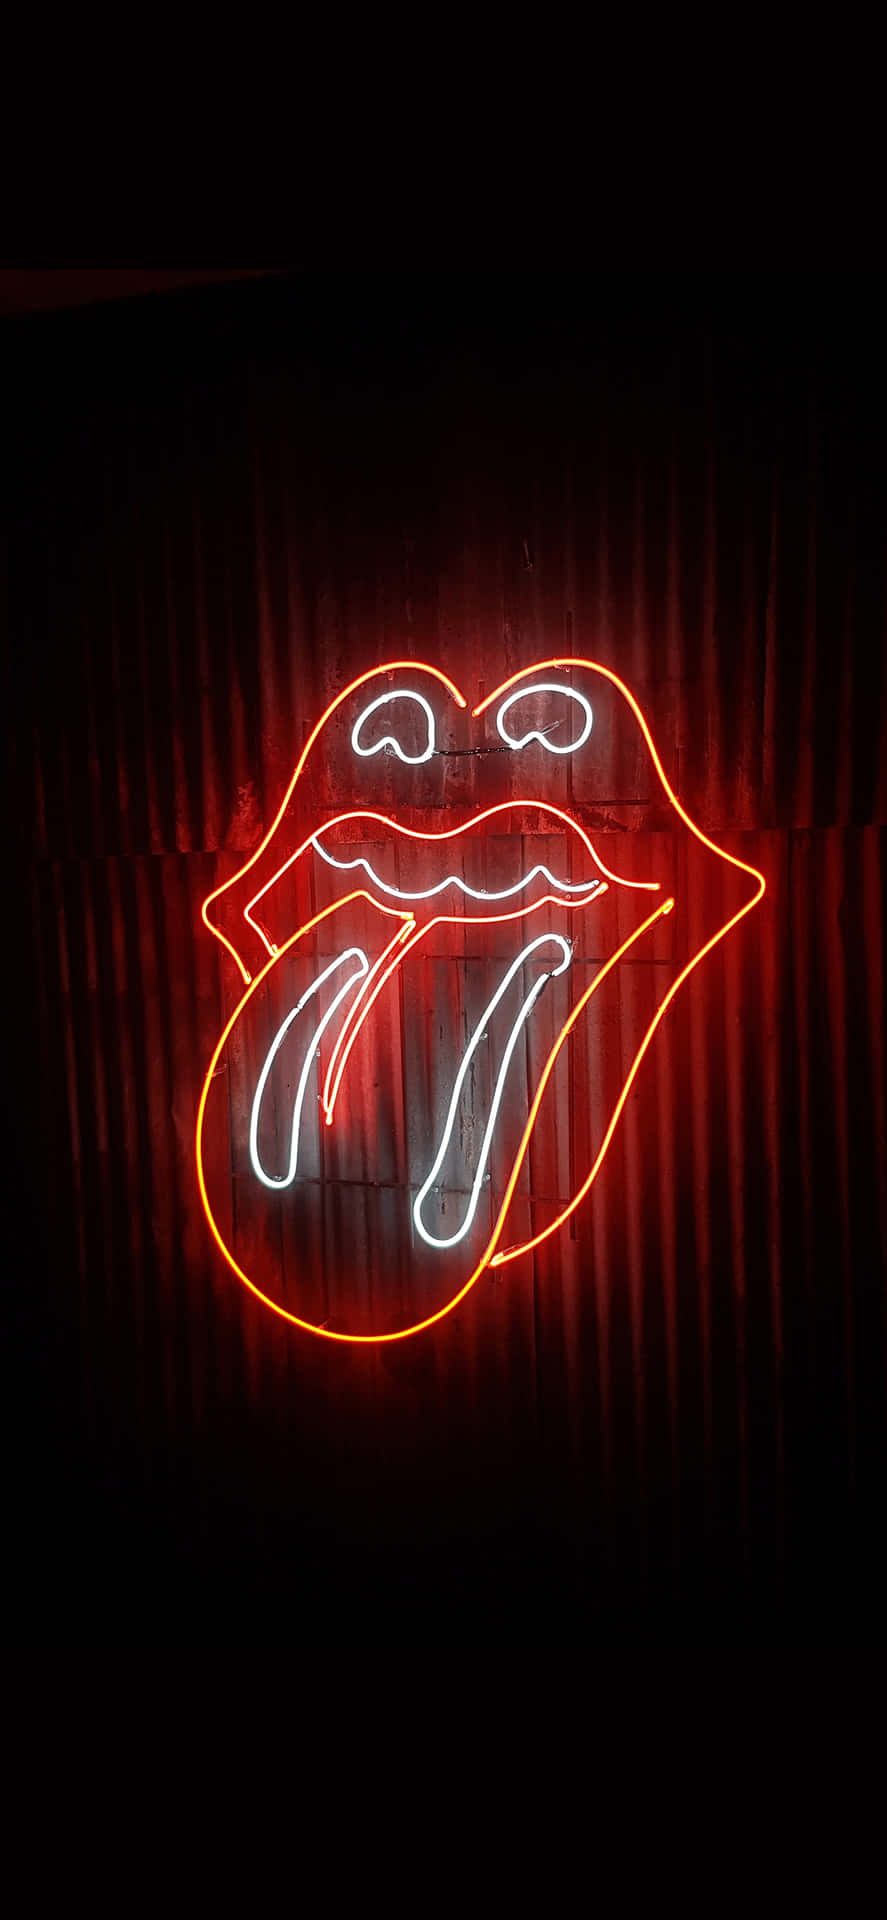 Black Red Neon Rolling Stones Wallpaper